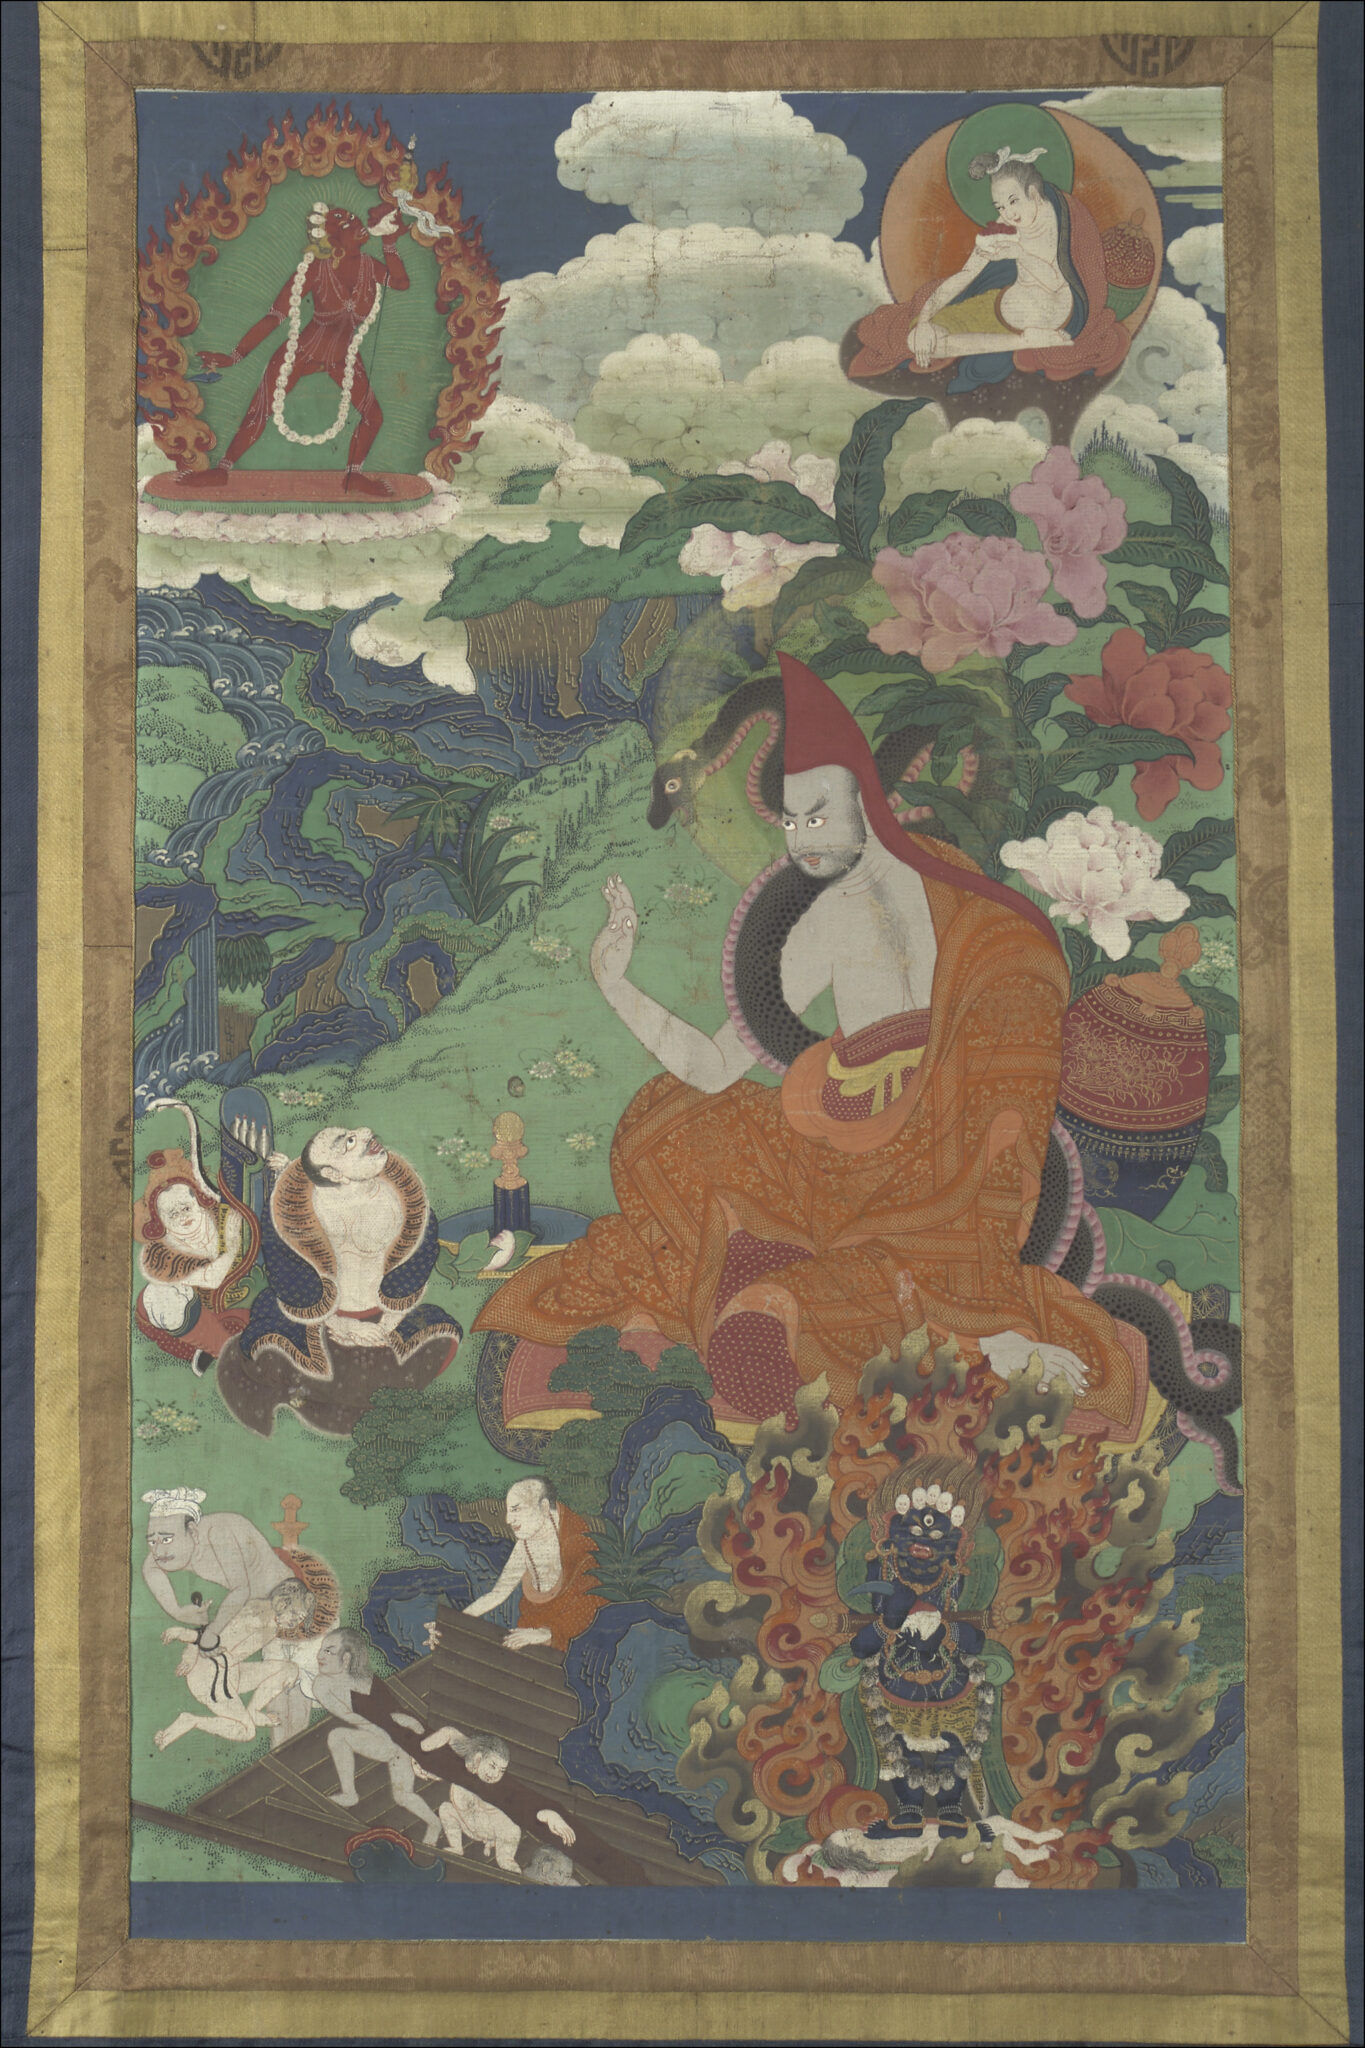 Monk in brilliant orange robe with serpent at left shoulder gestures with left hand against menacing figures at left